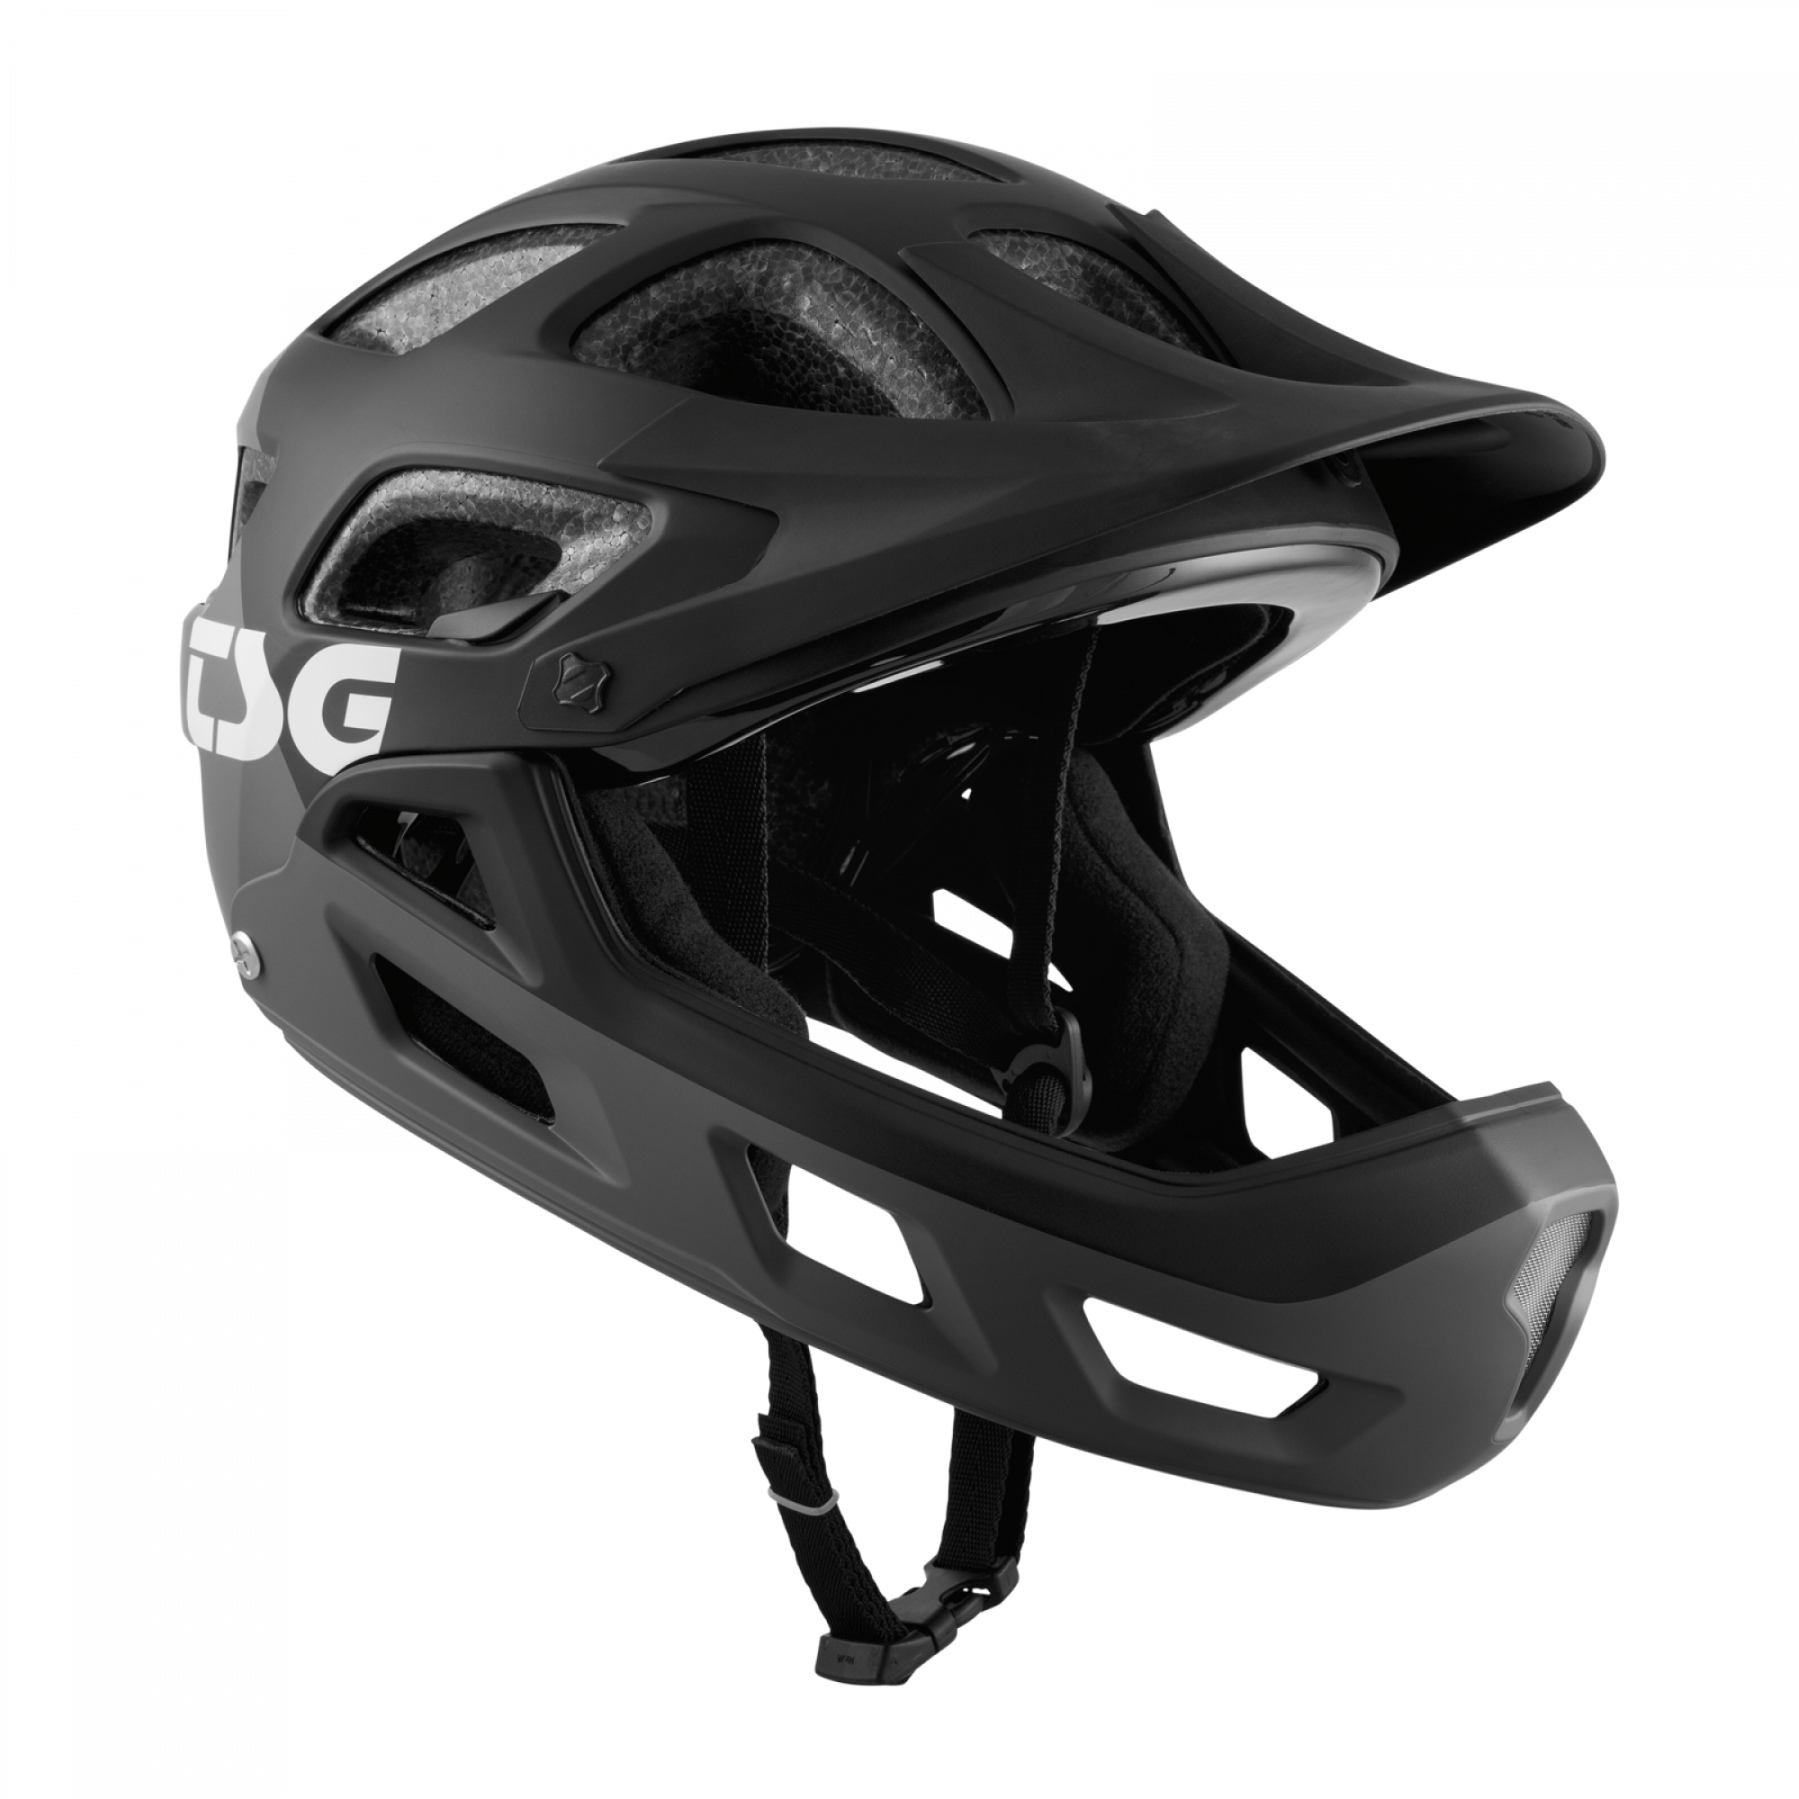 Immagine di TSG Seek FR Graphic Design Helmet - flow grey-black